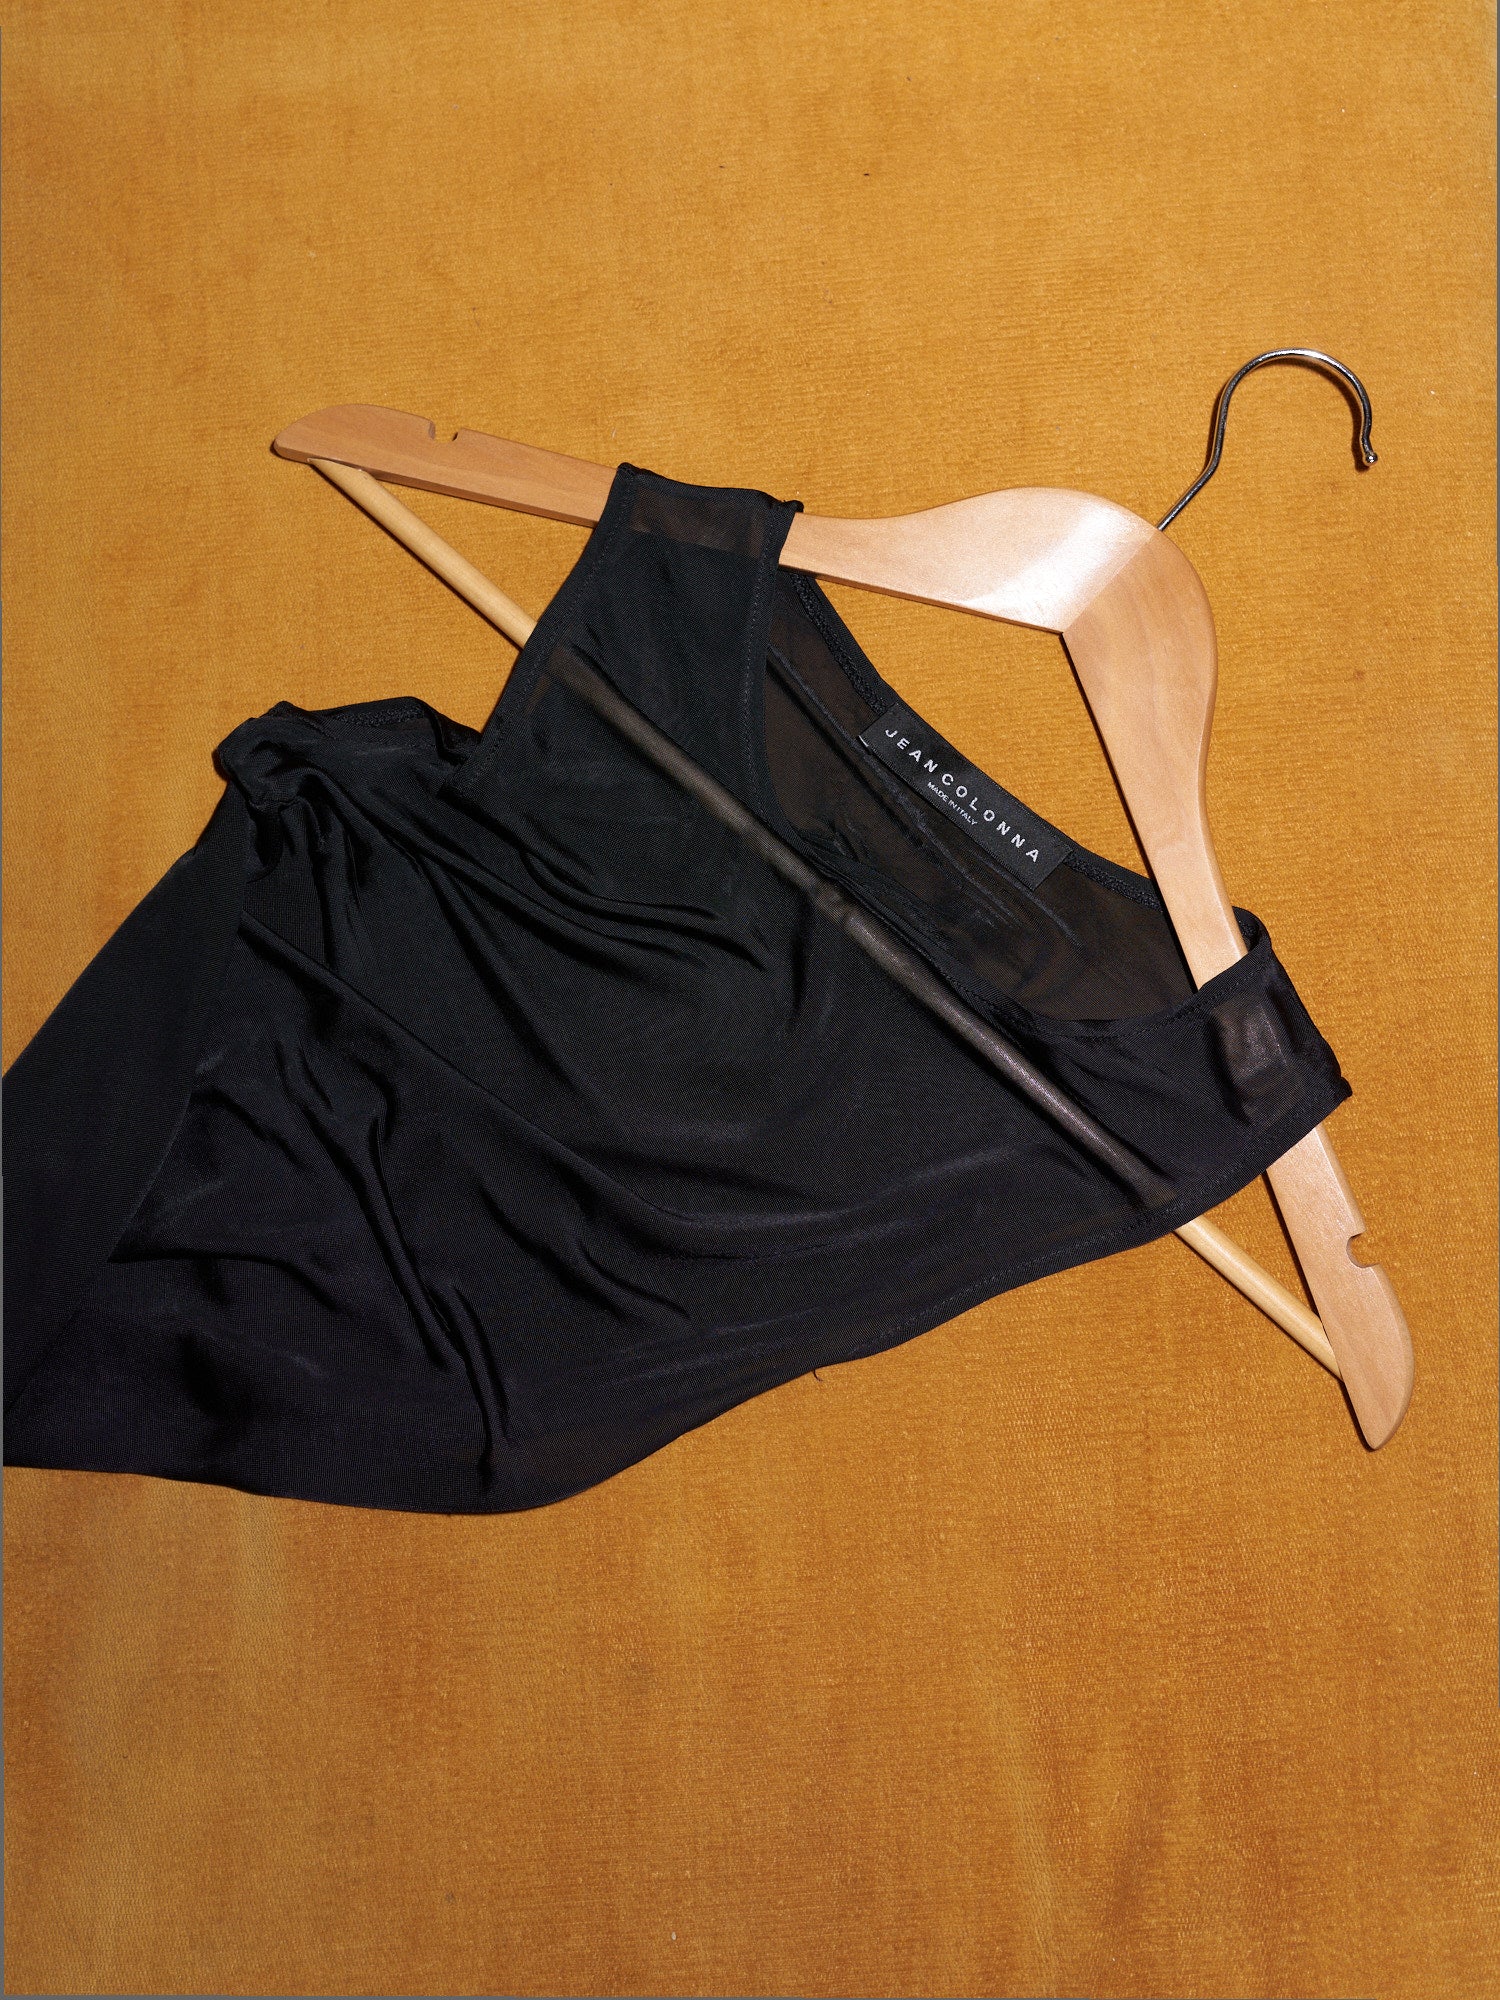 Jean Colonna black double layered sleeveless dress - size 40